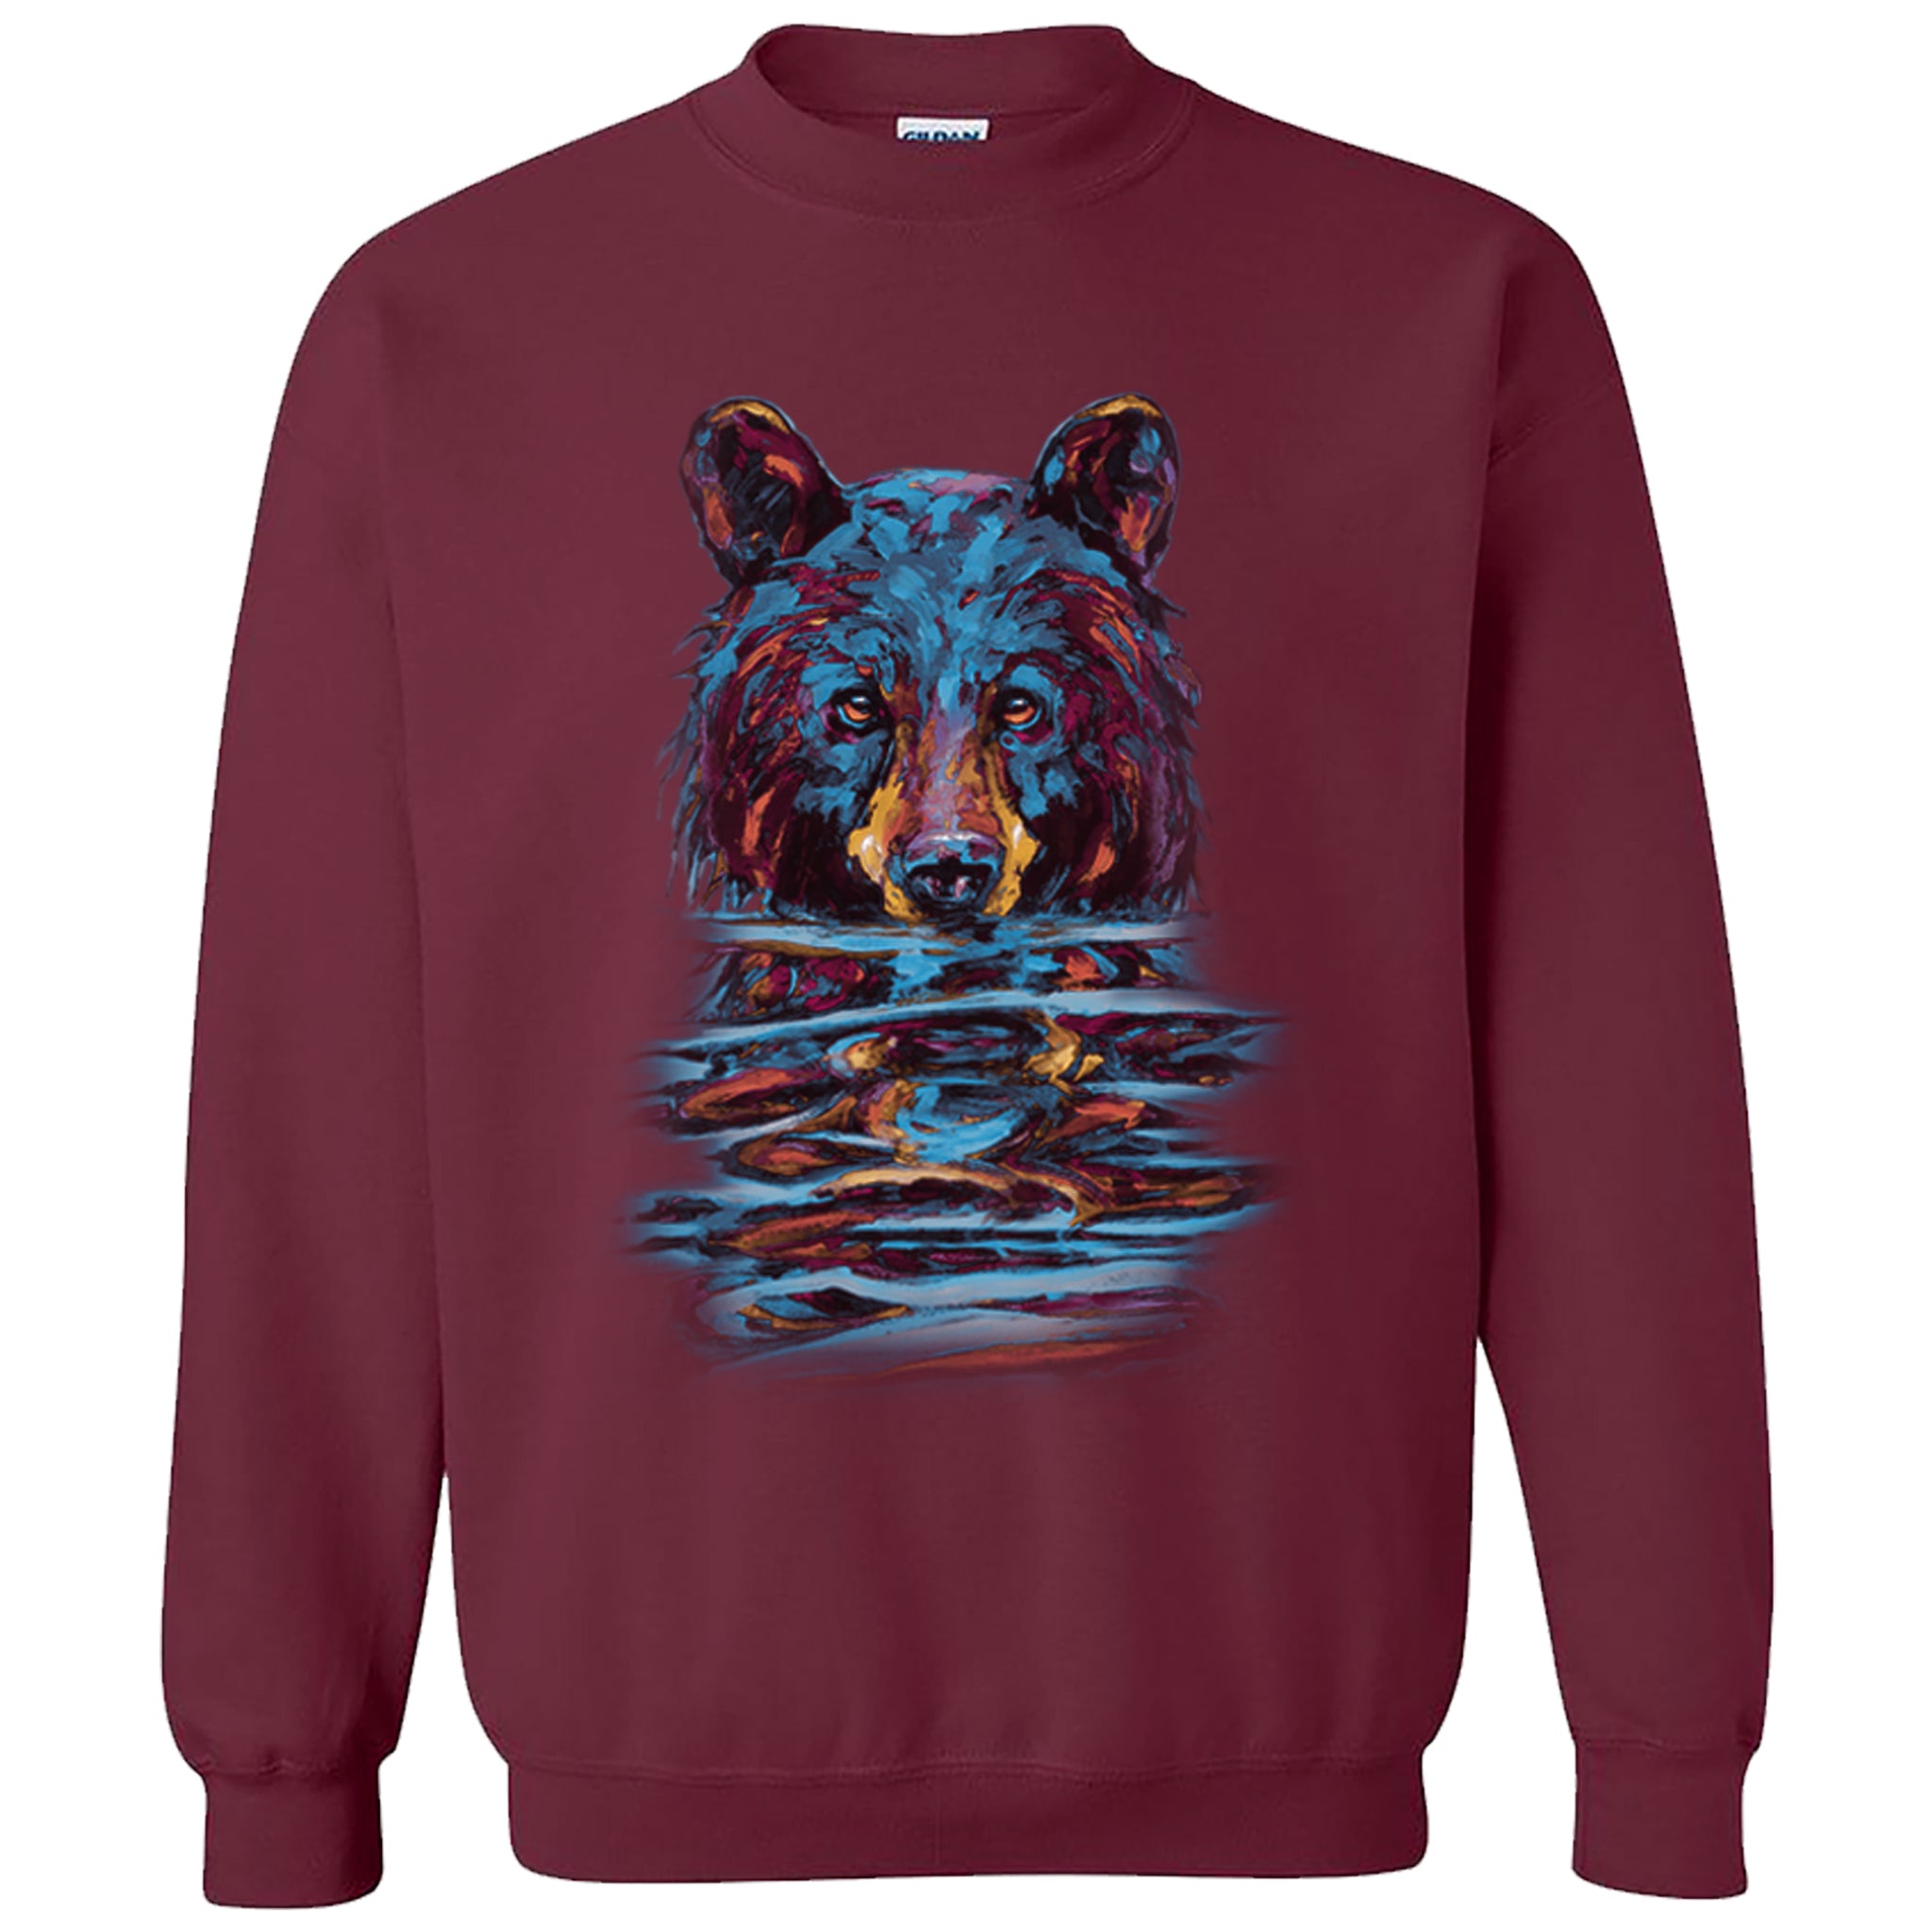 Very Wet Bear Crewneck - maroon crewneck sweatshirt with black bear art by Canadian nature artist Kari Lehr